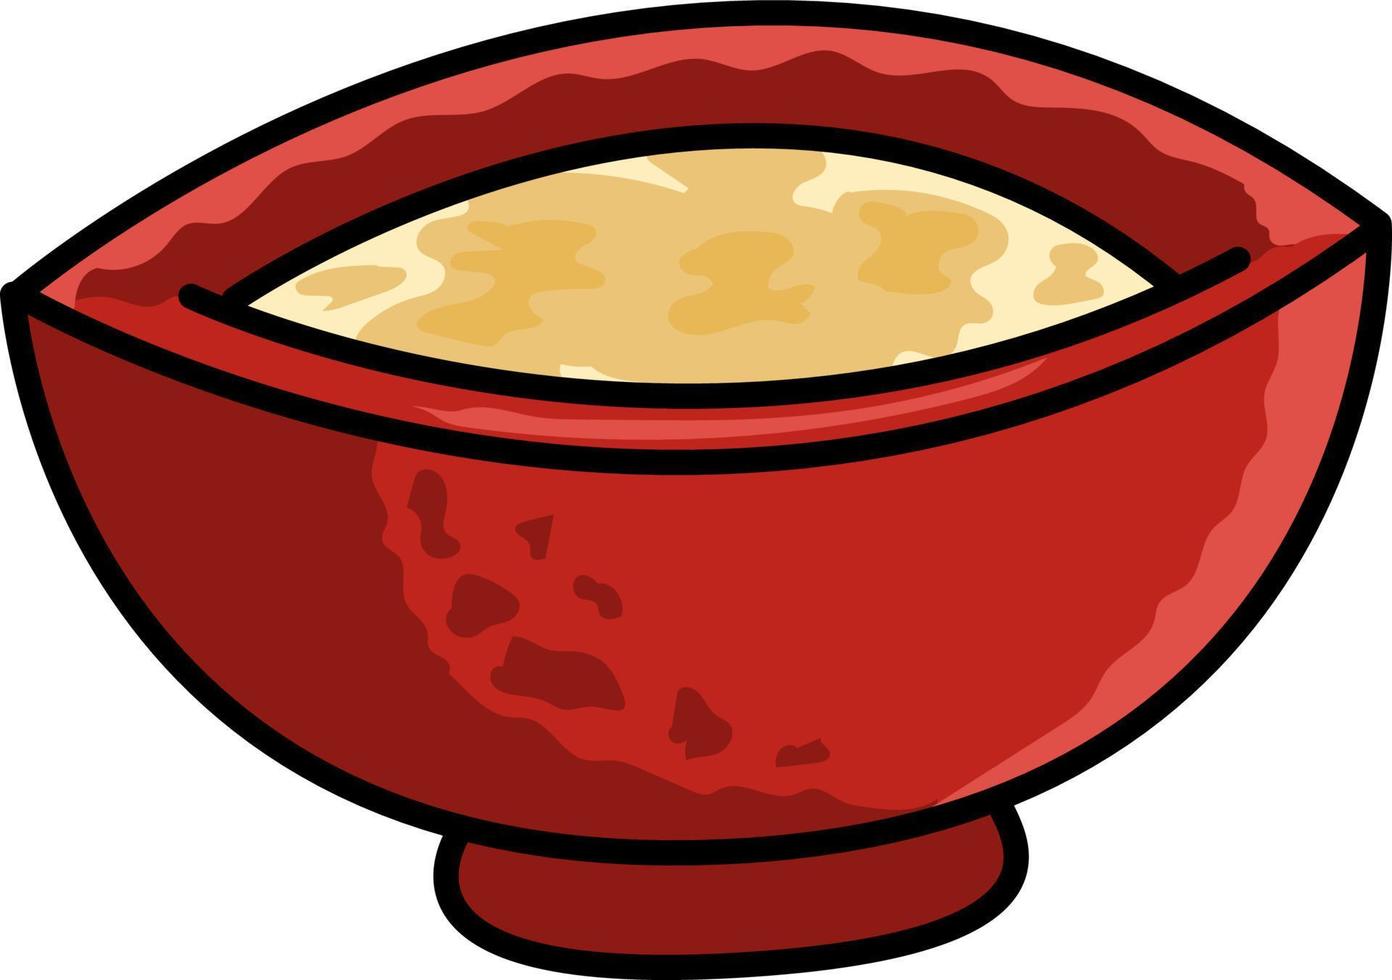 Red soup bowl illustration vector